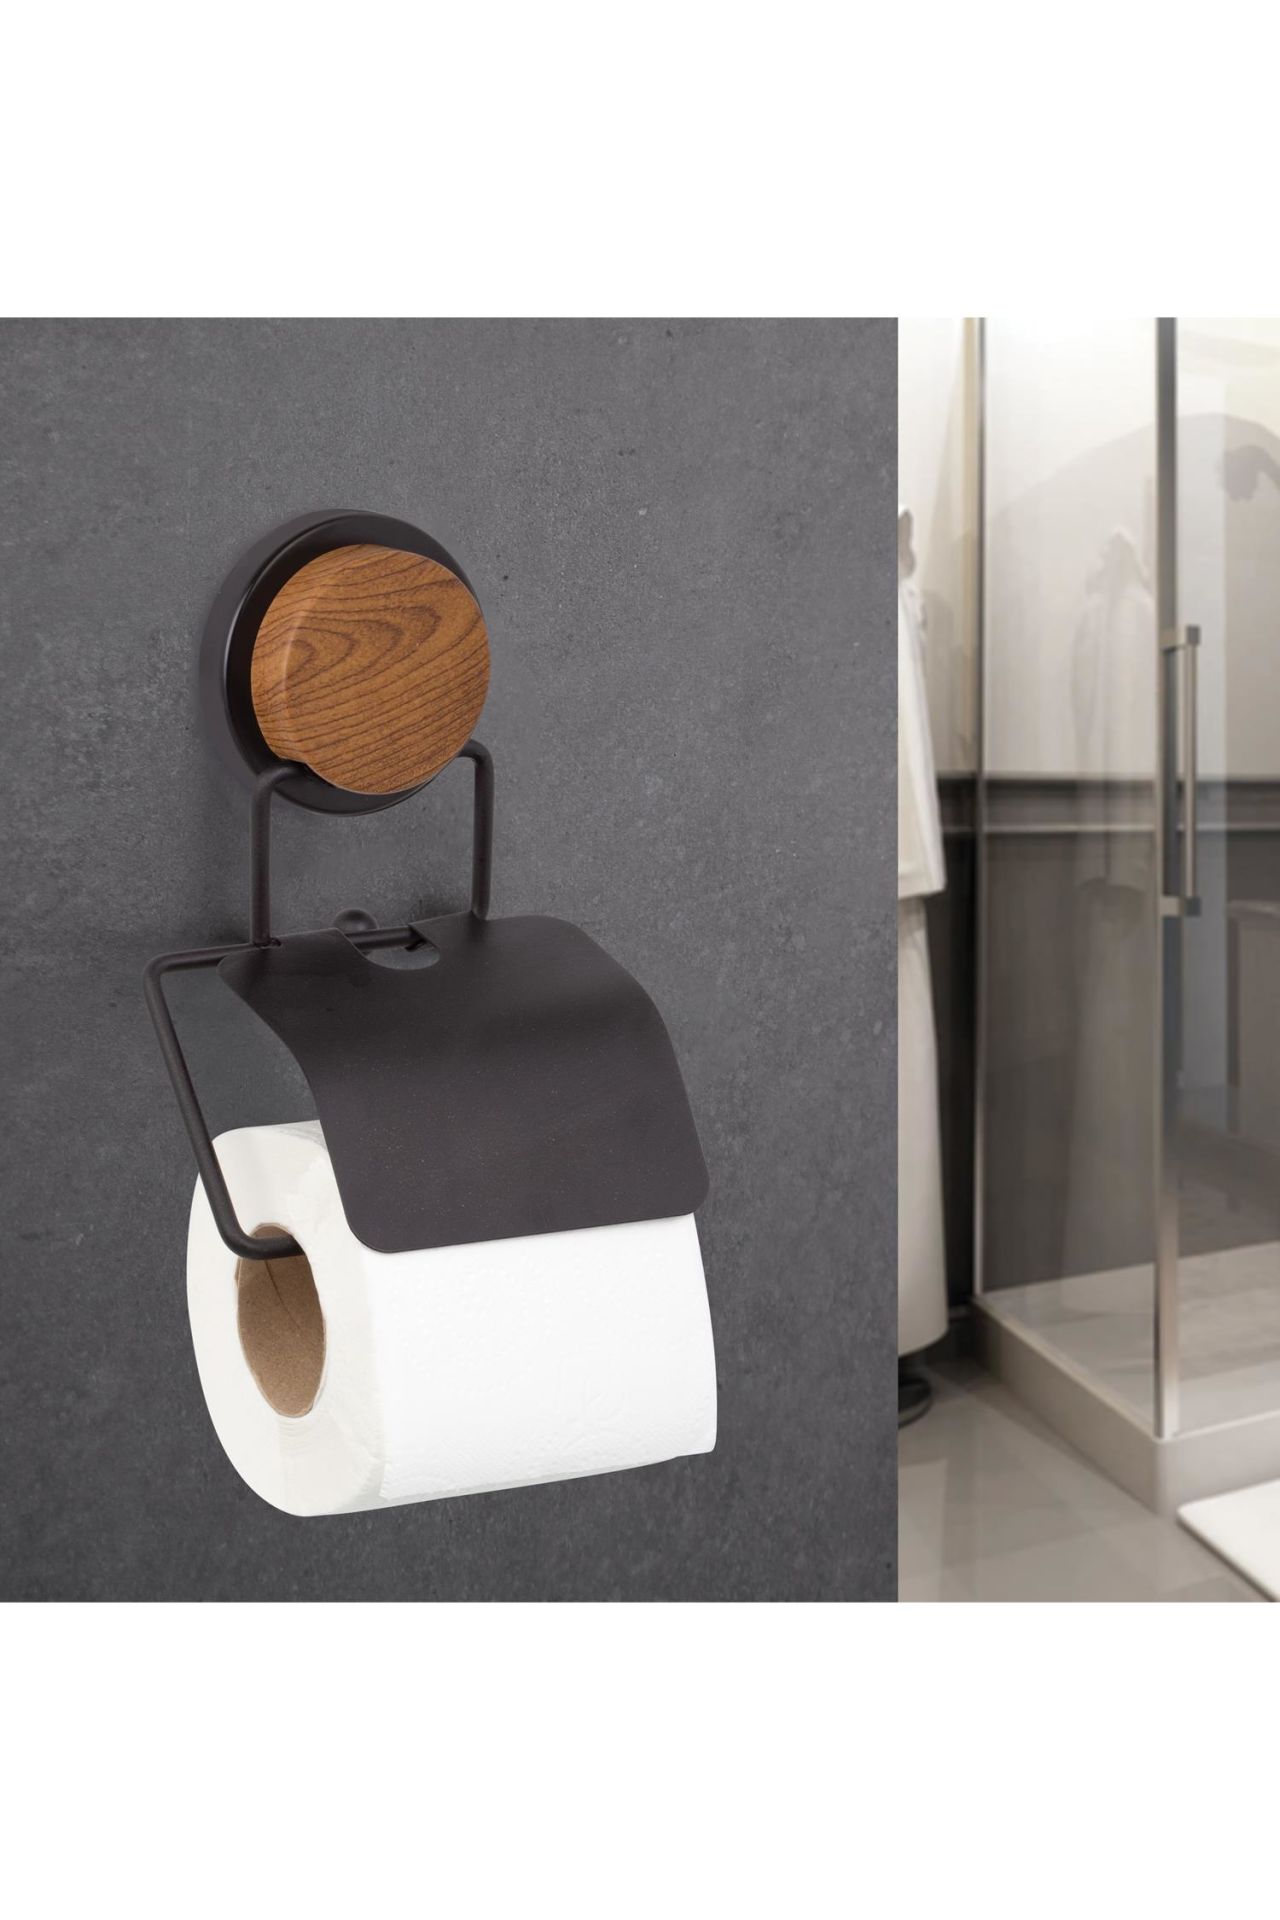 Okyanus Home Ahşap Desenli Magic Fix Sihirli Yapışkan Siyah Kapaklı Tuvalet Kağıtlık MGS-712W